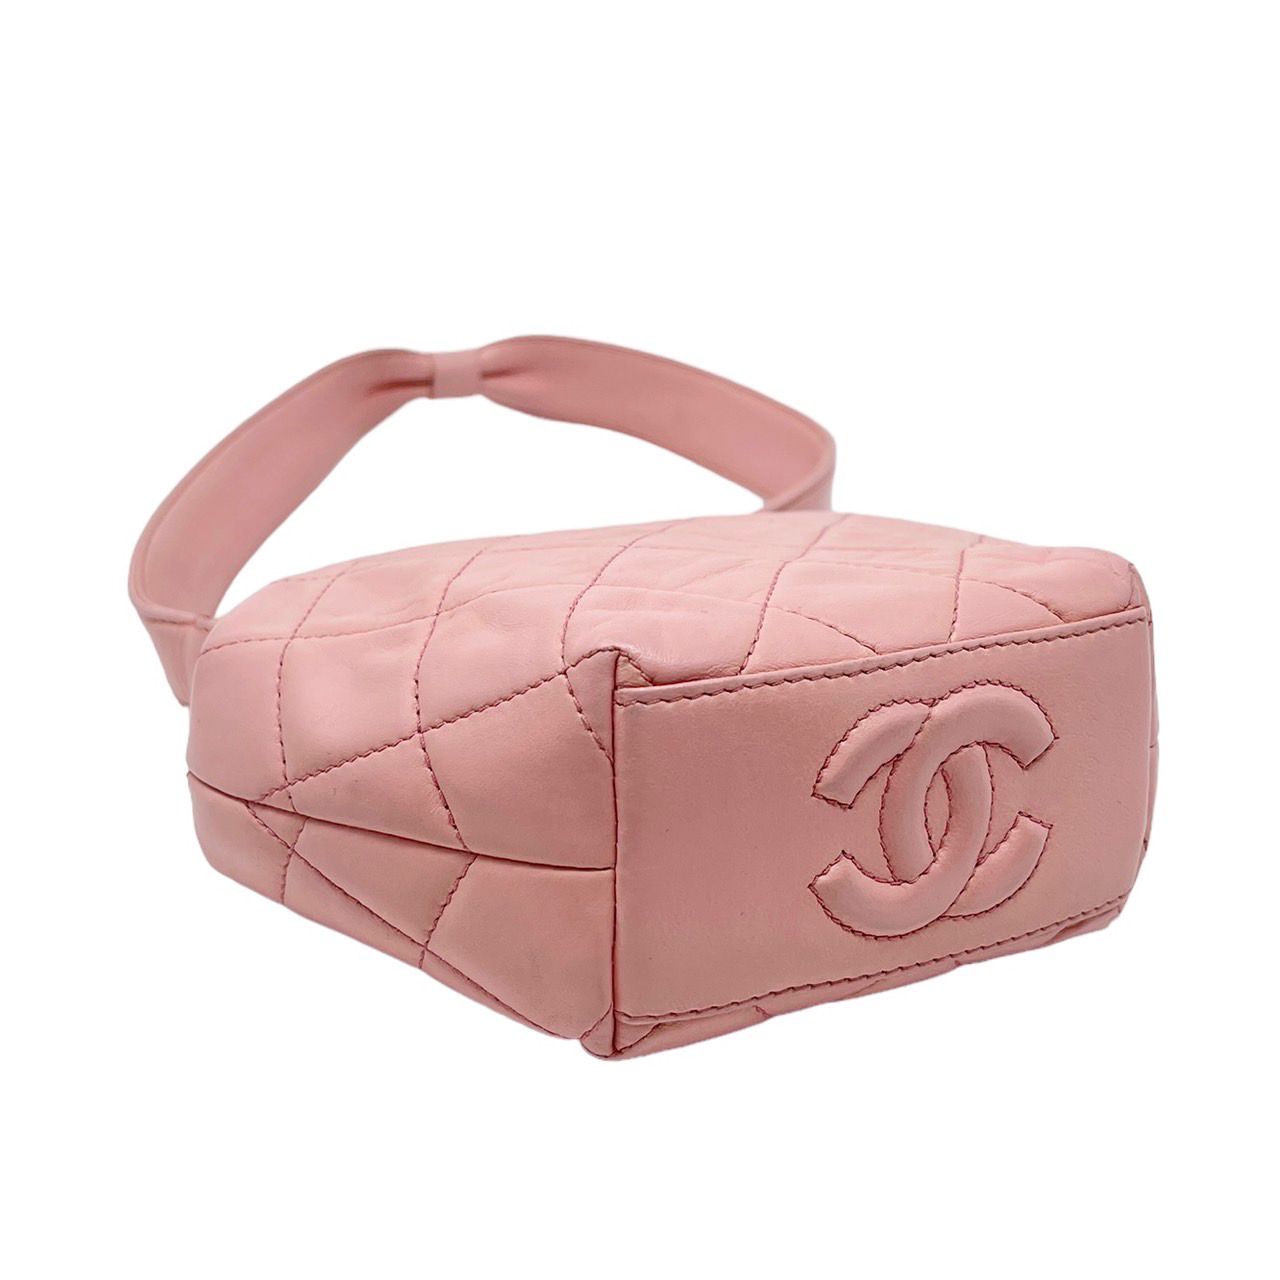 Chanel Mini Top Handle Bag